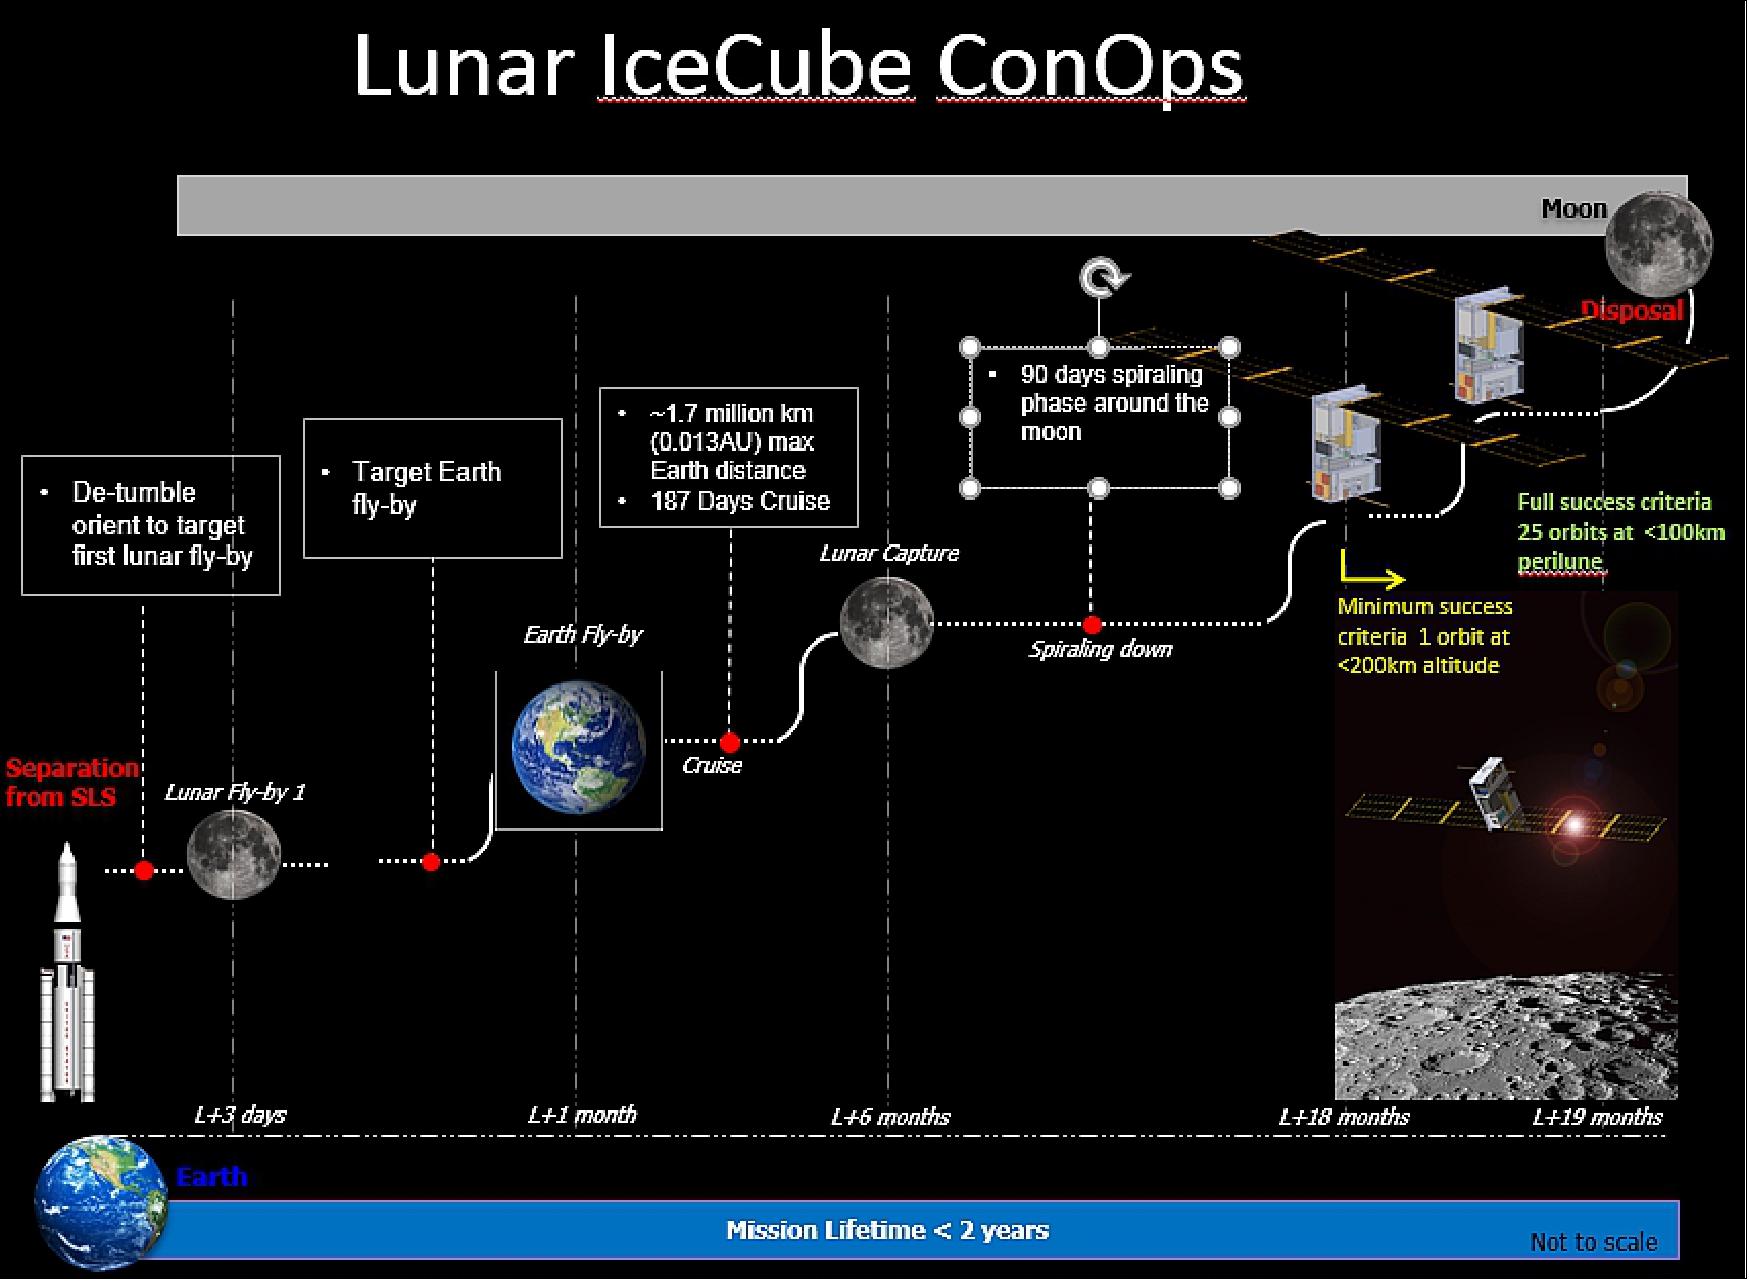 Figure 10: Lunar IceCube ConOps (Concept of Operations), image credit: MSU, NASA) 15)